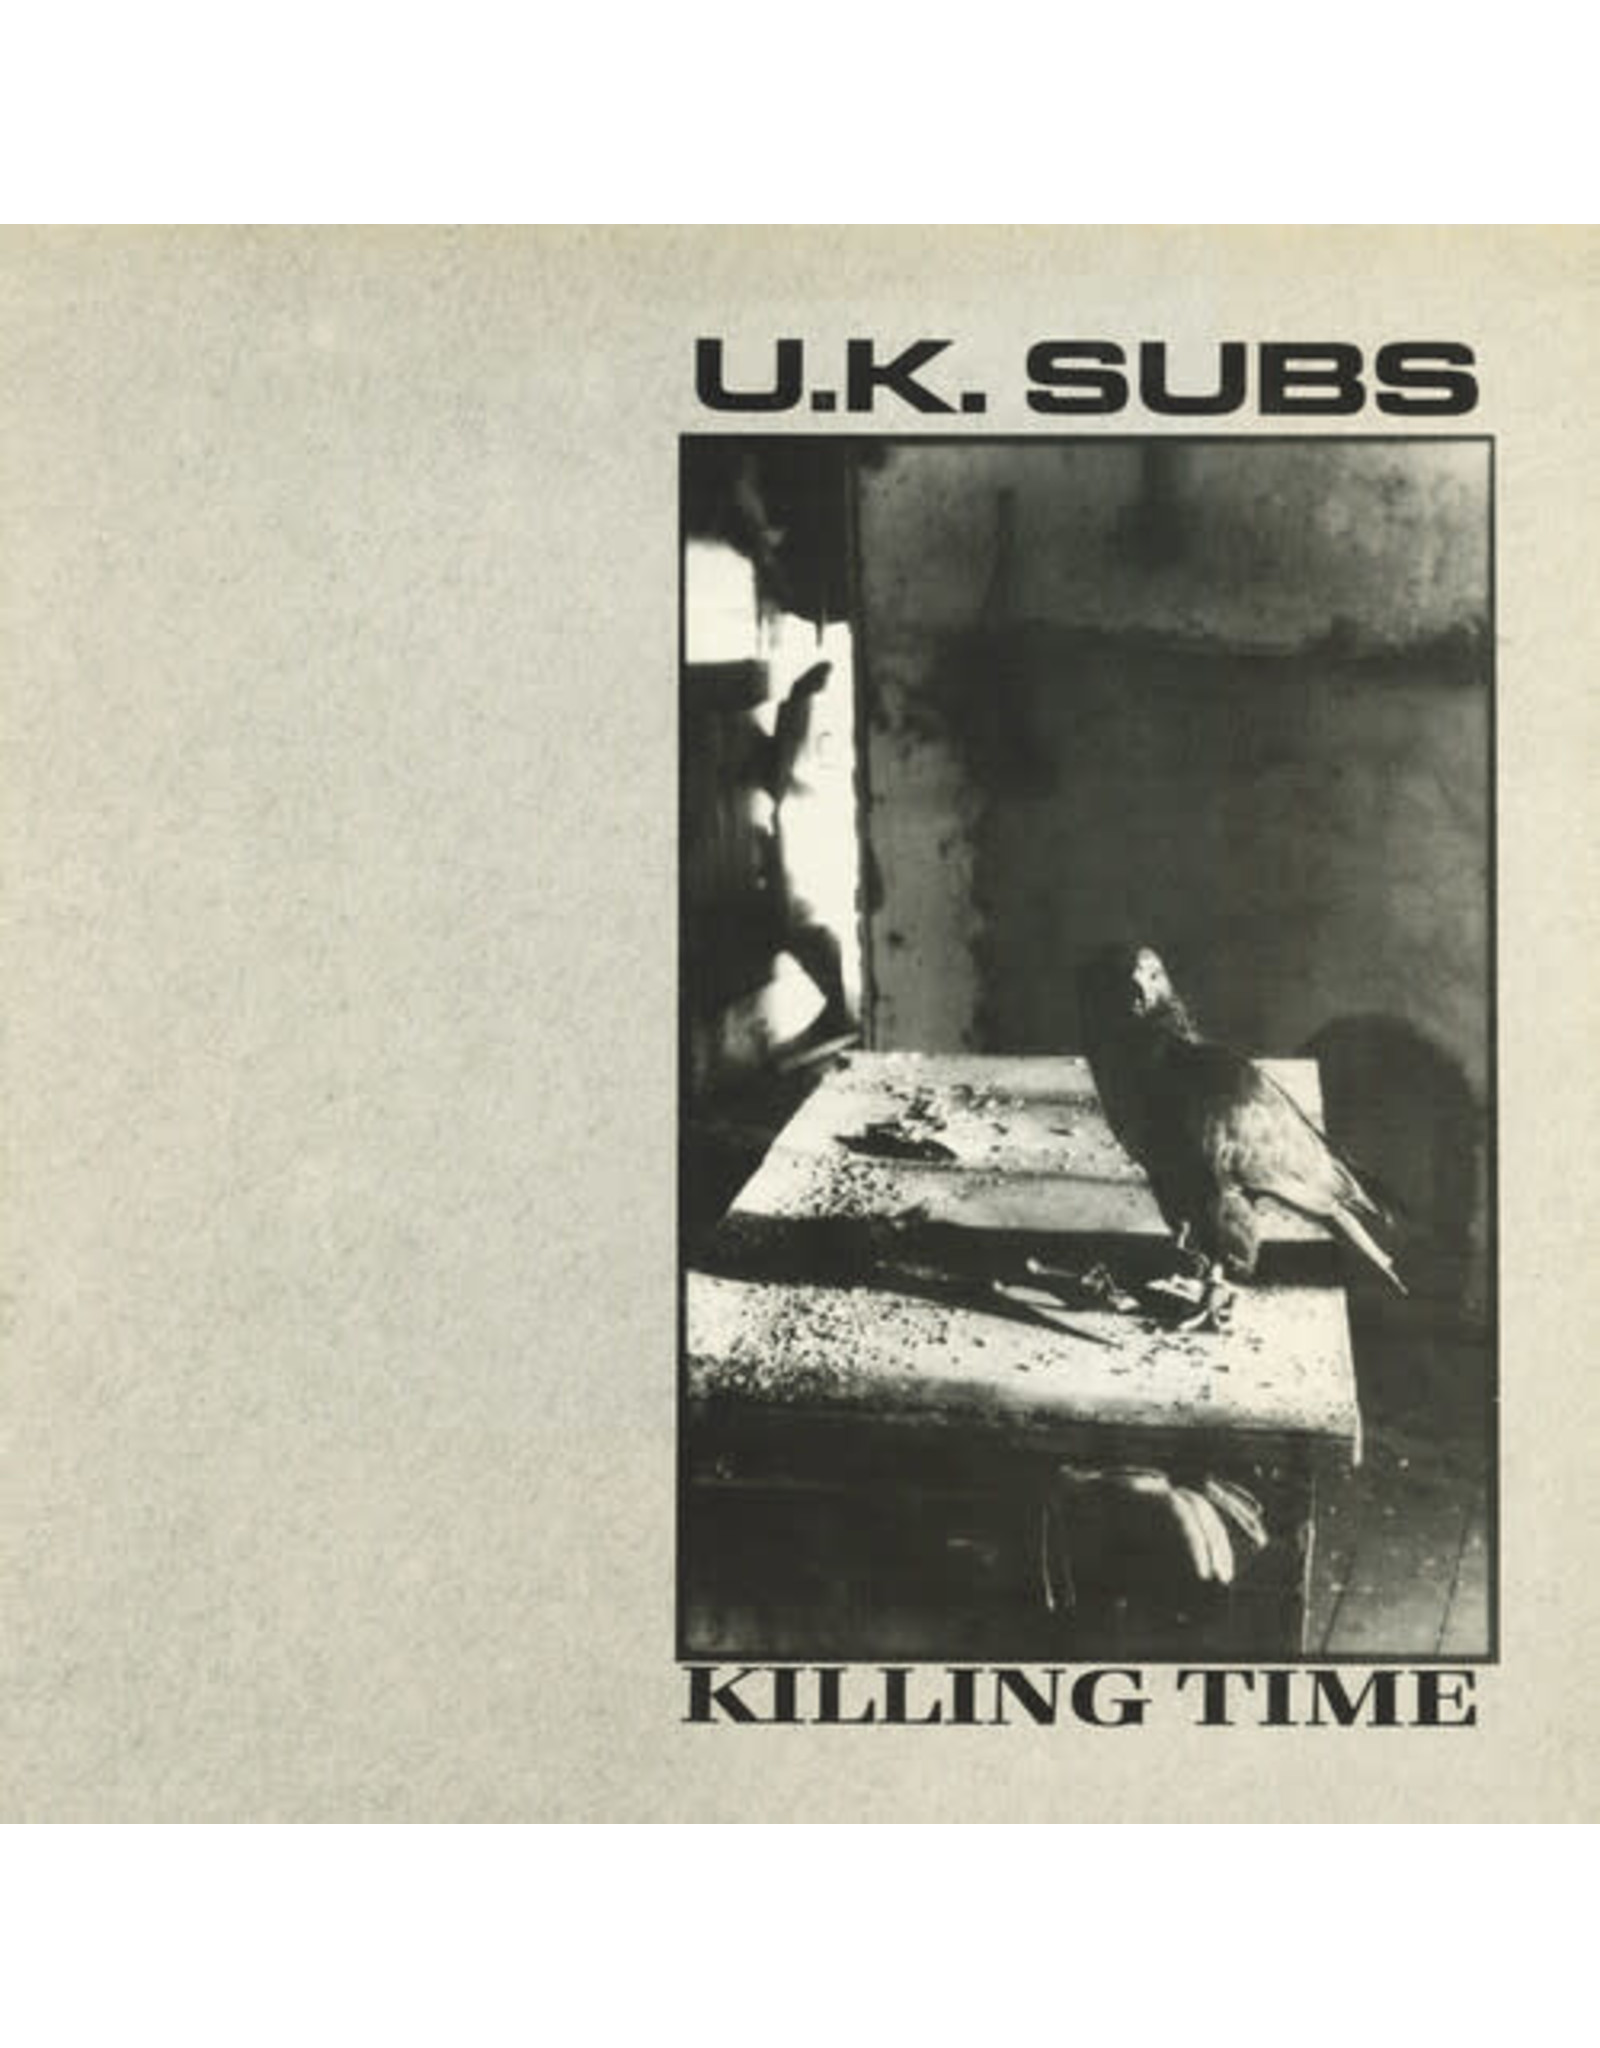 New Vinyl UK Subs - Killing Time (Colored) LP